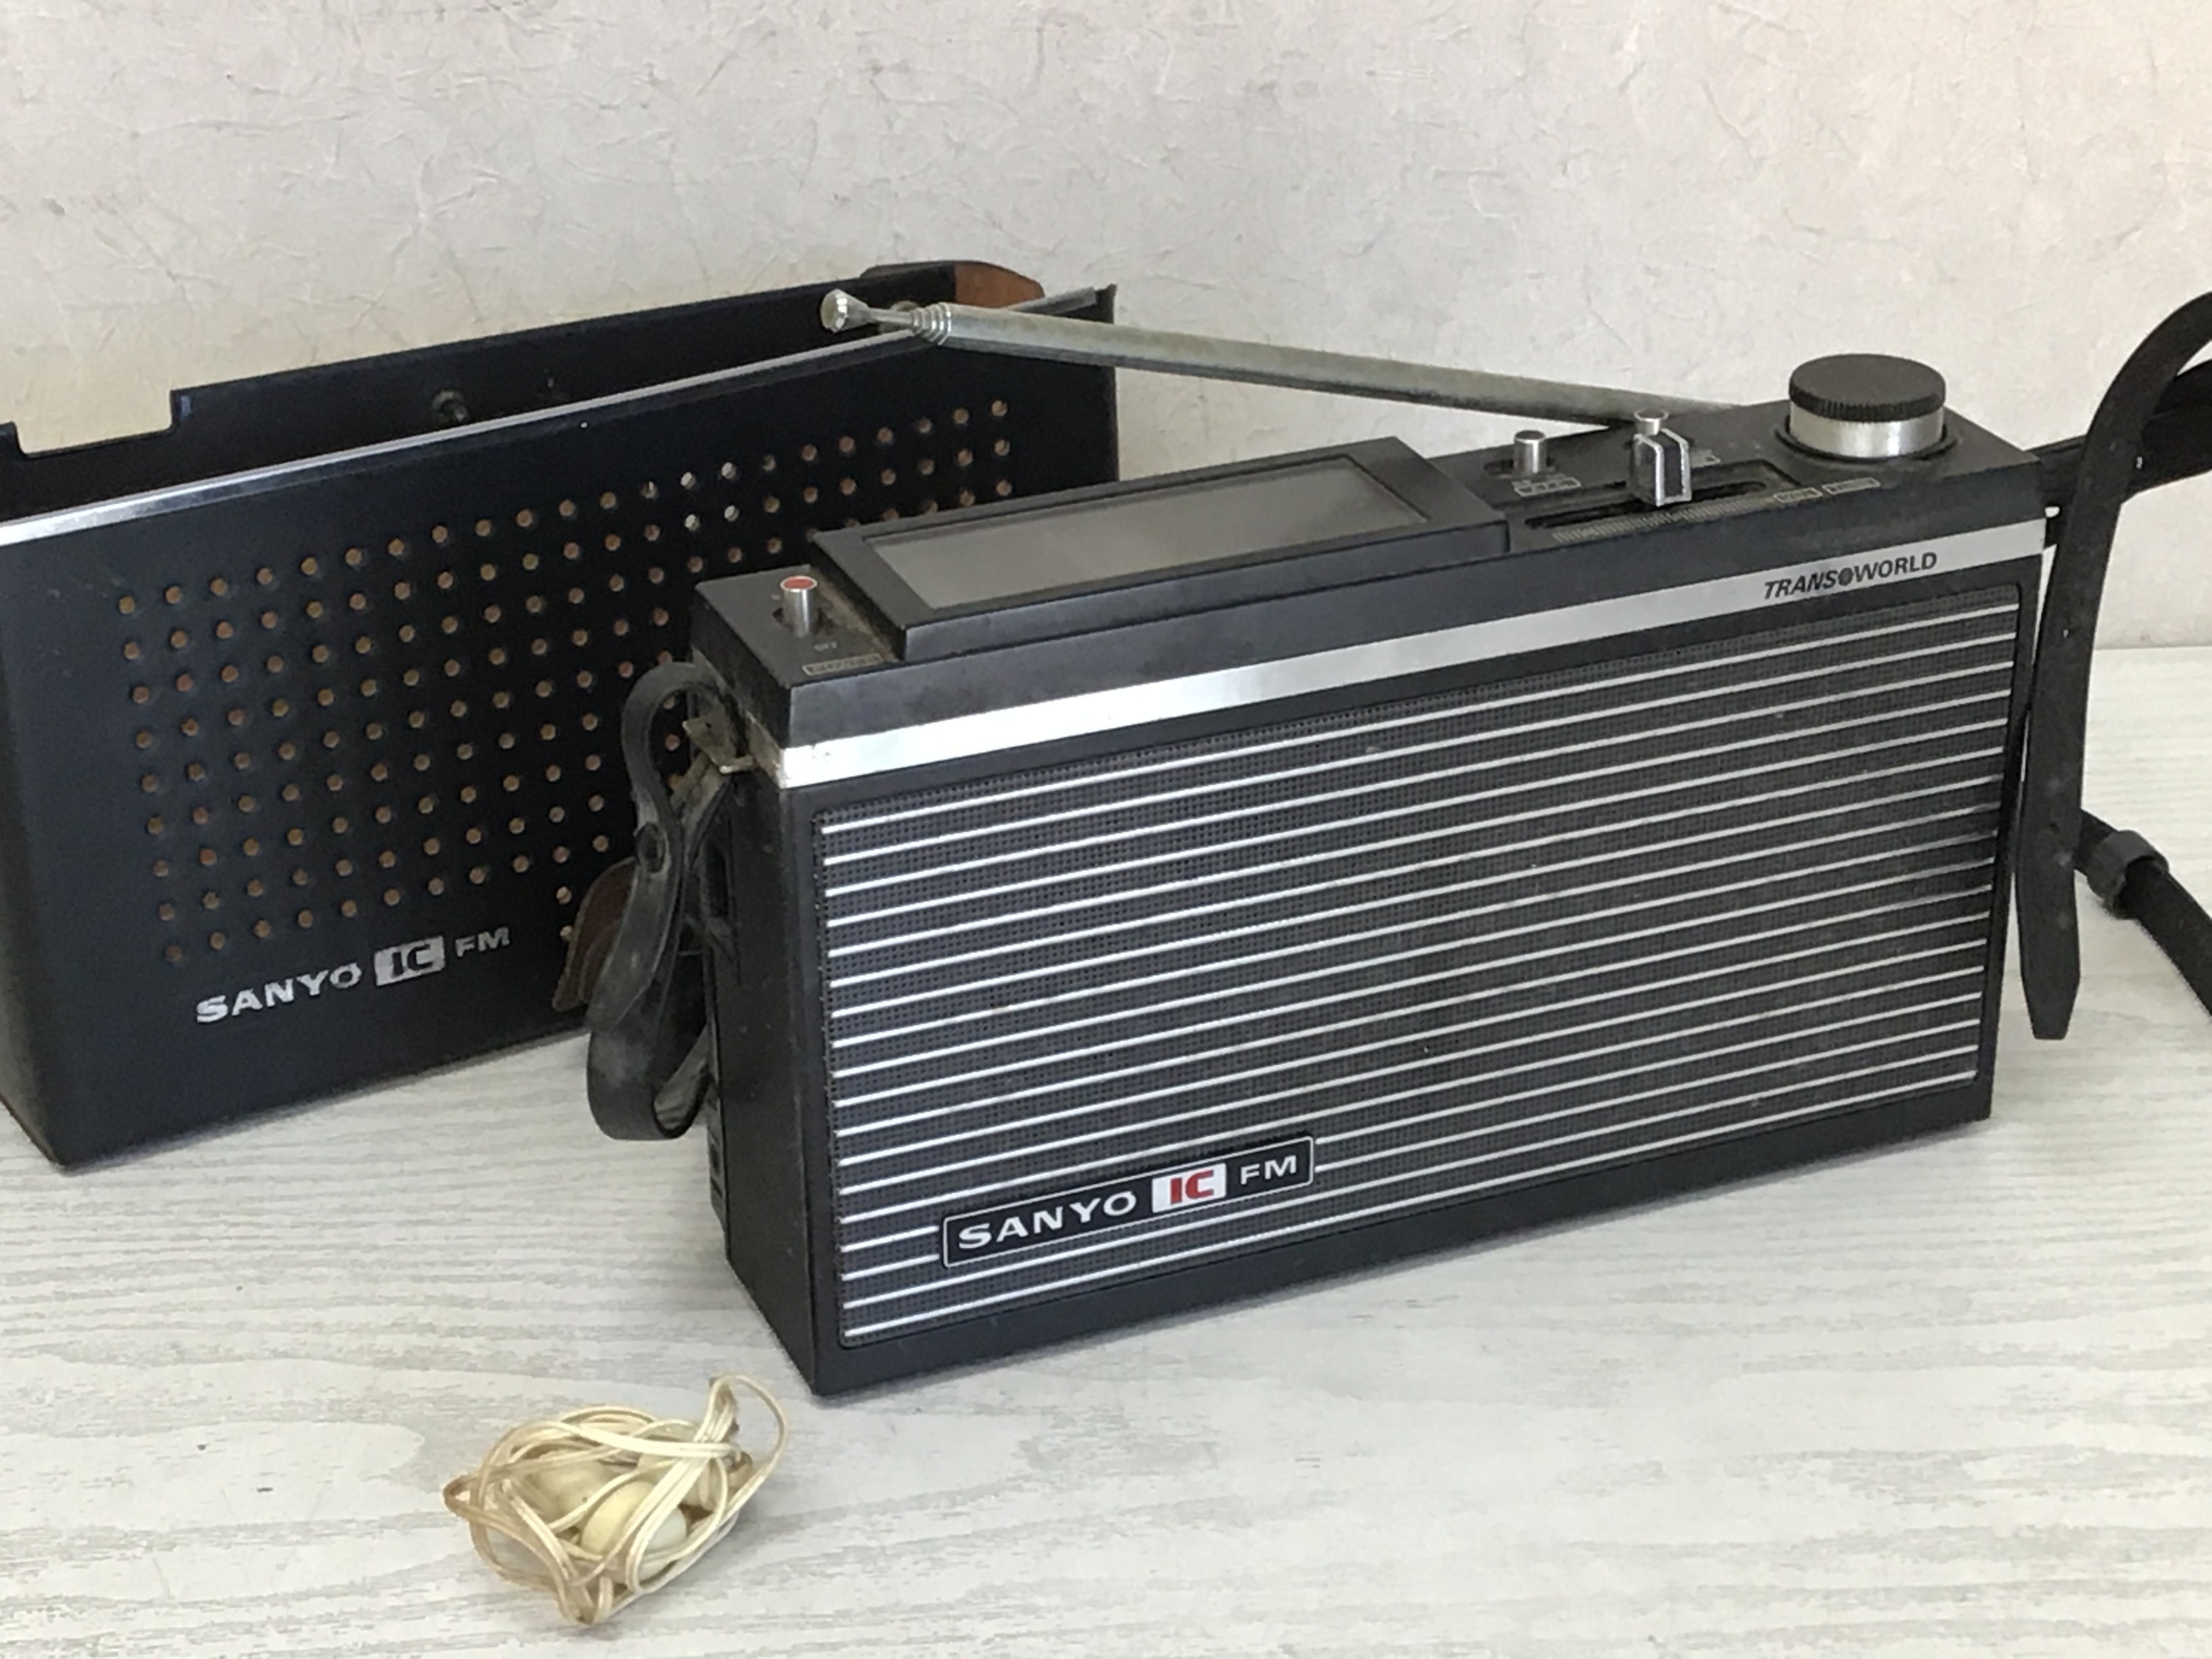 Y2336 RADIO SANYO 10F-B36 transistor portable Japan antique vintage music  news